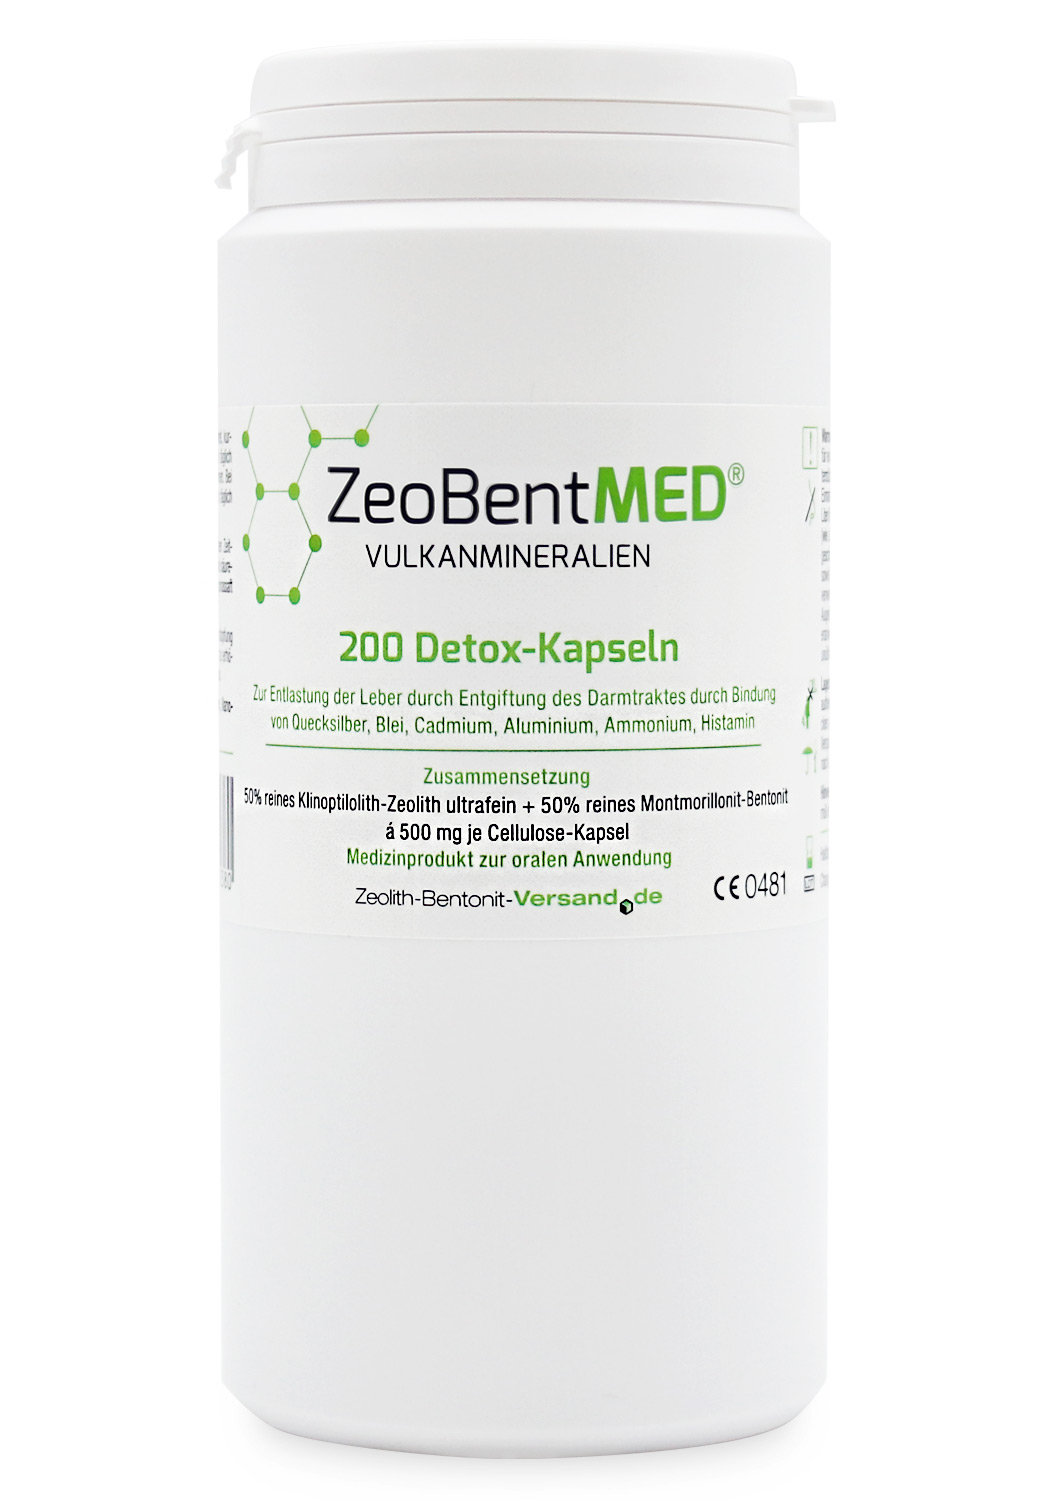 ZeoBentMED® Detox-Kapseln, Zeolith + Bentonit, 200 Stück Darreichungsform: Kapseln / Gewicht: 200 St.